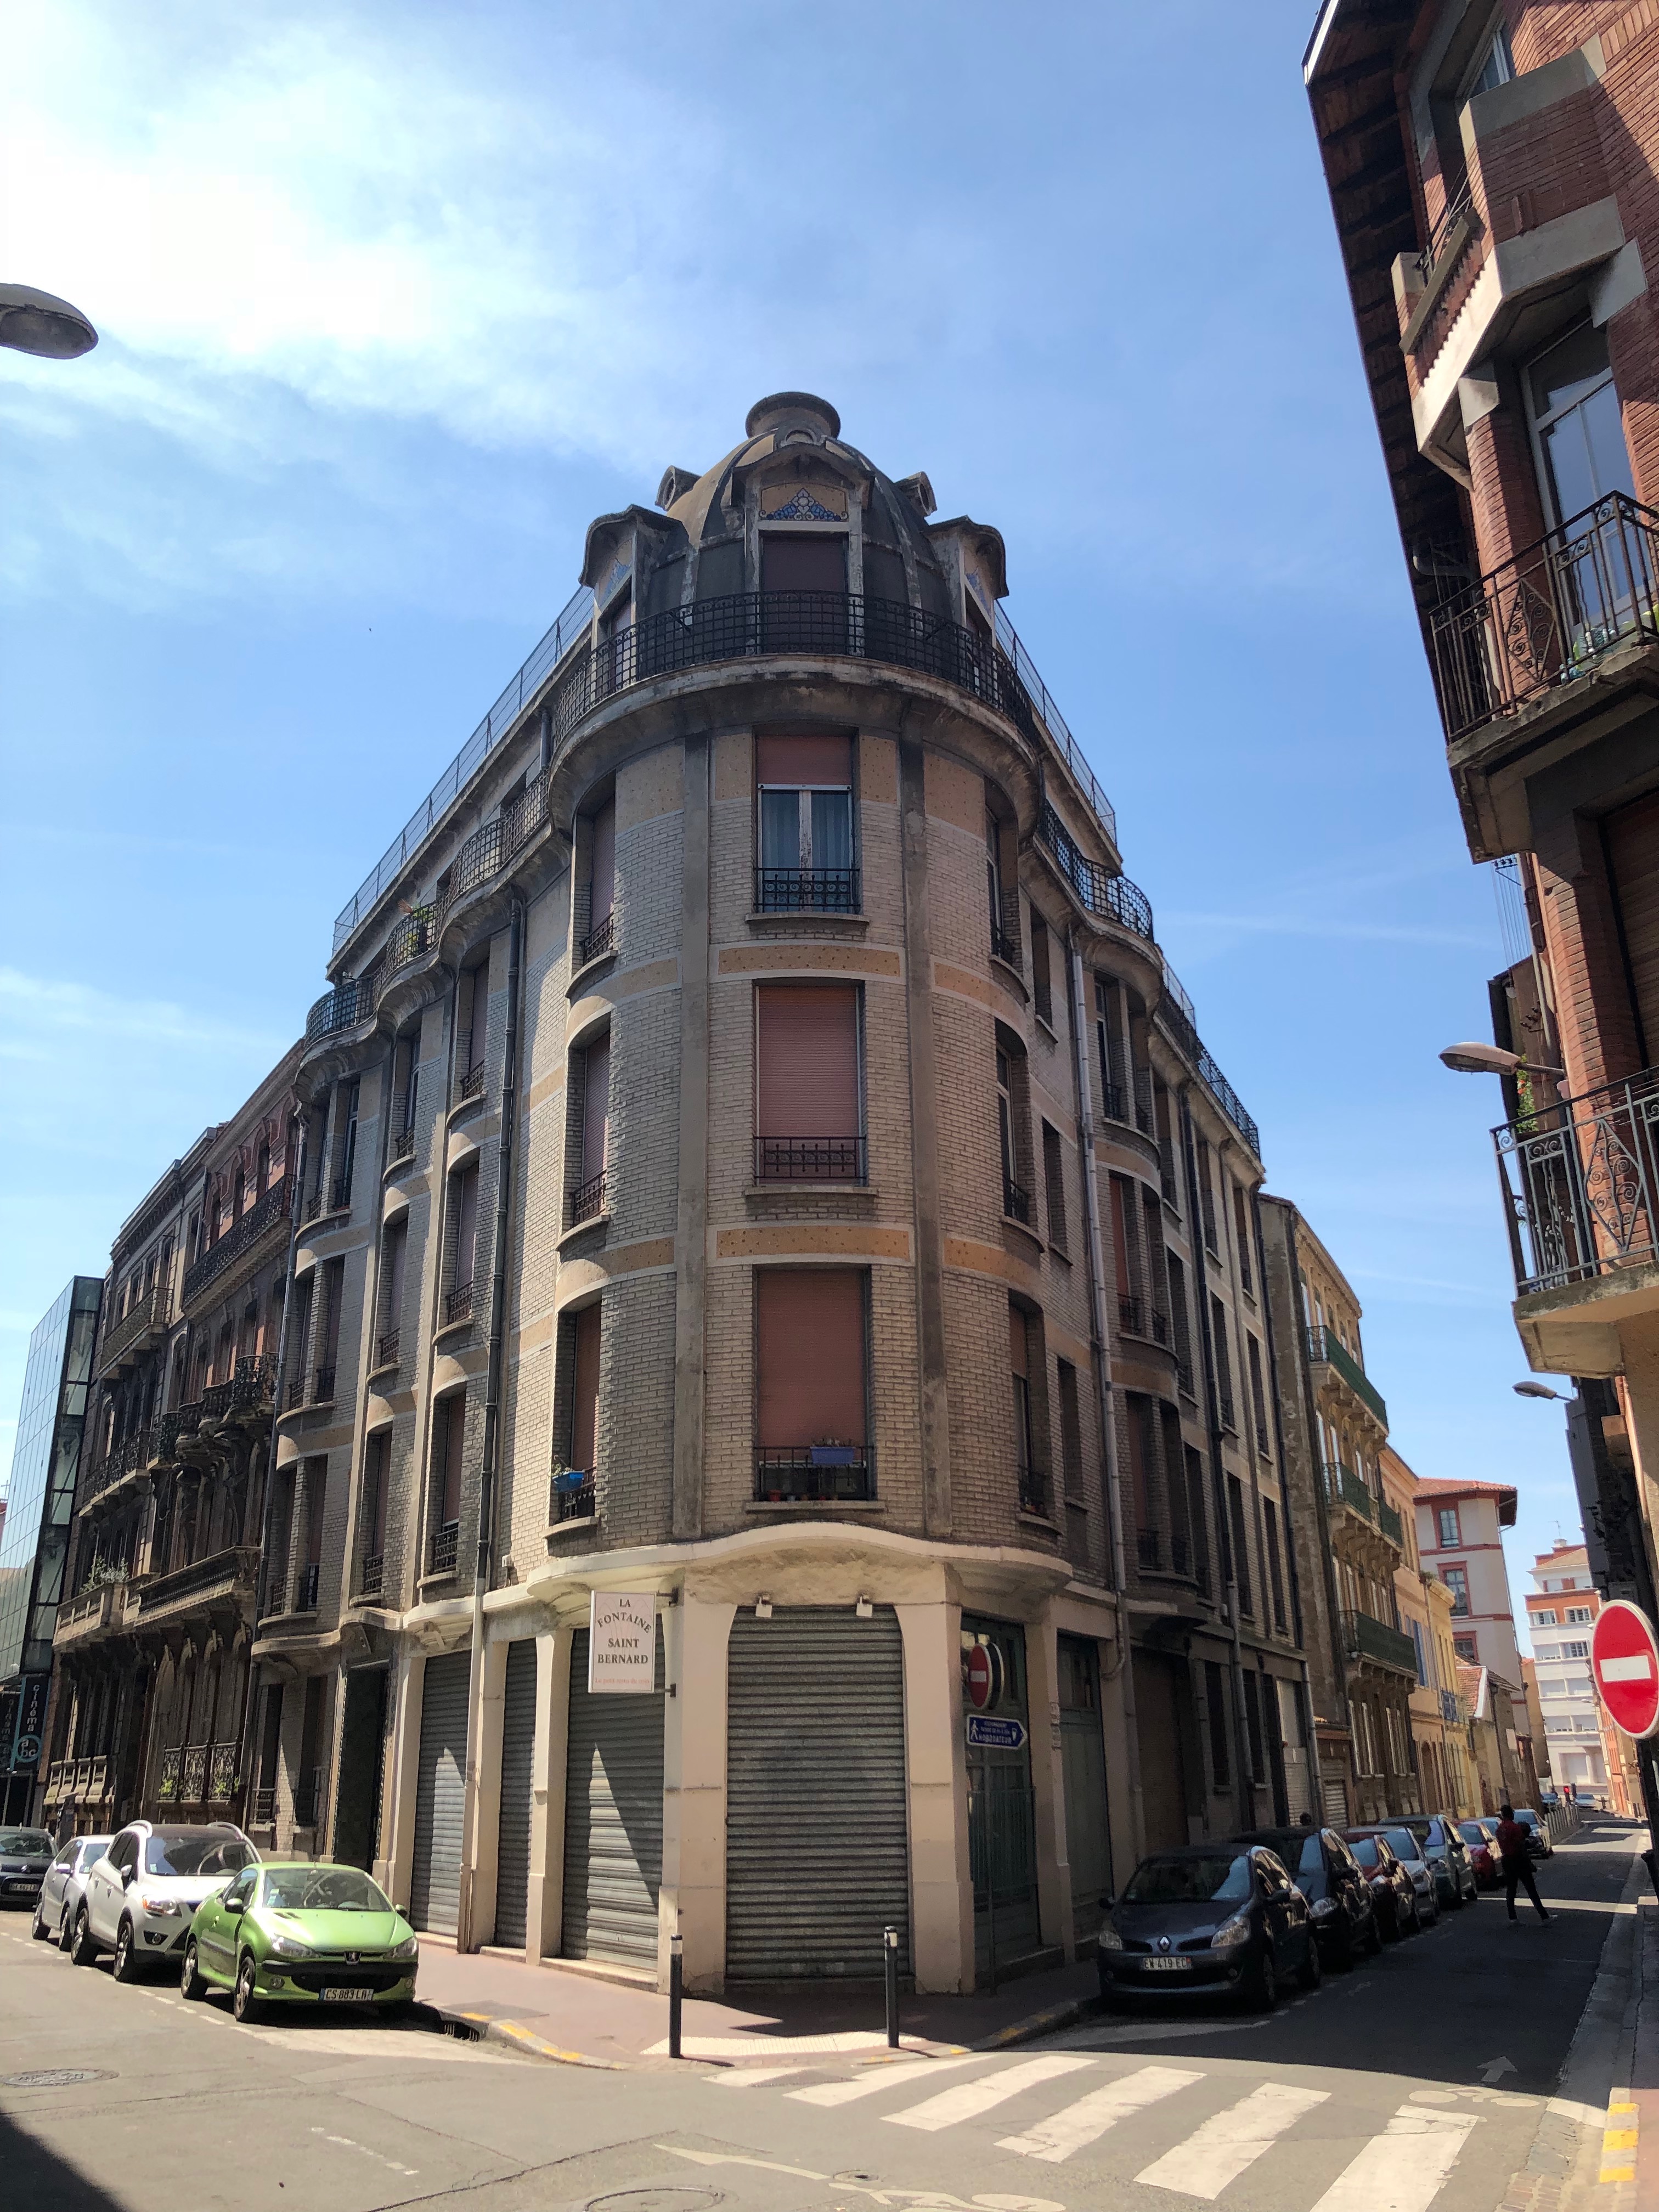 Immeuble Bonzom, 19 rue Saint Bernard, 1919, arch. E. Pilette